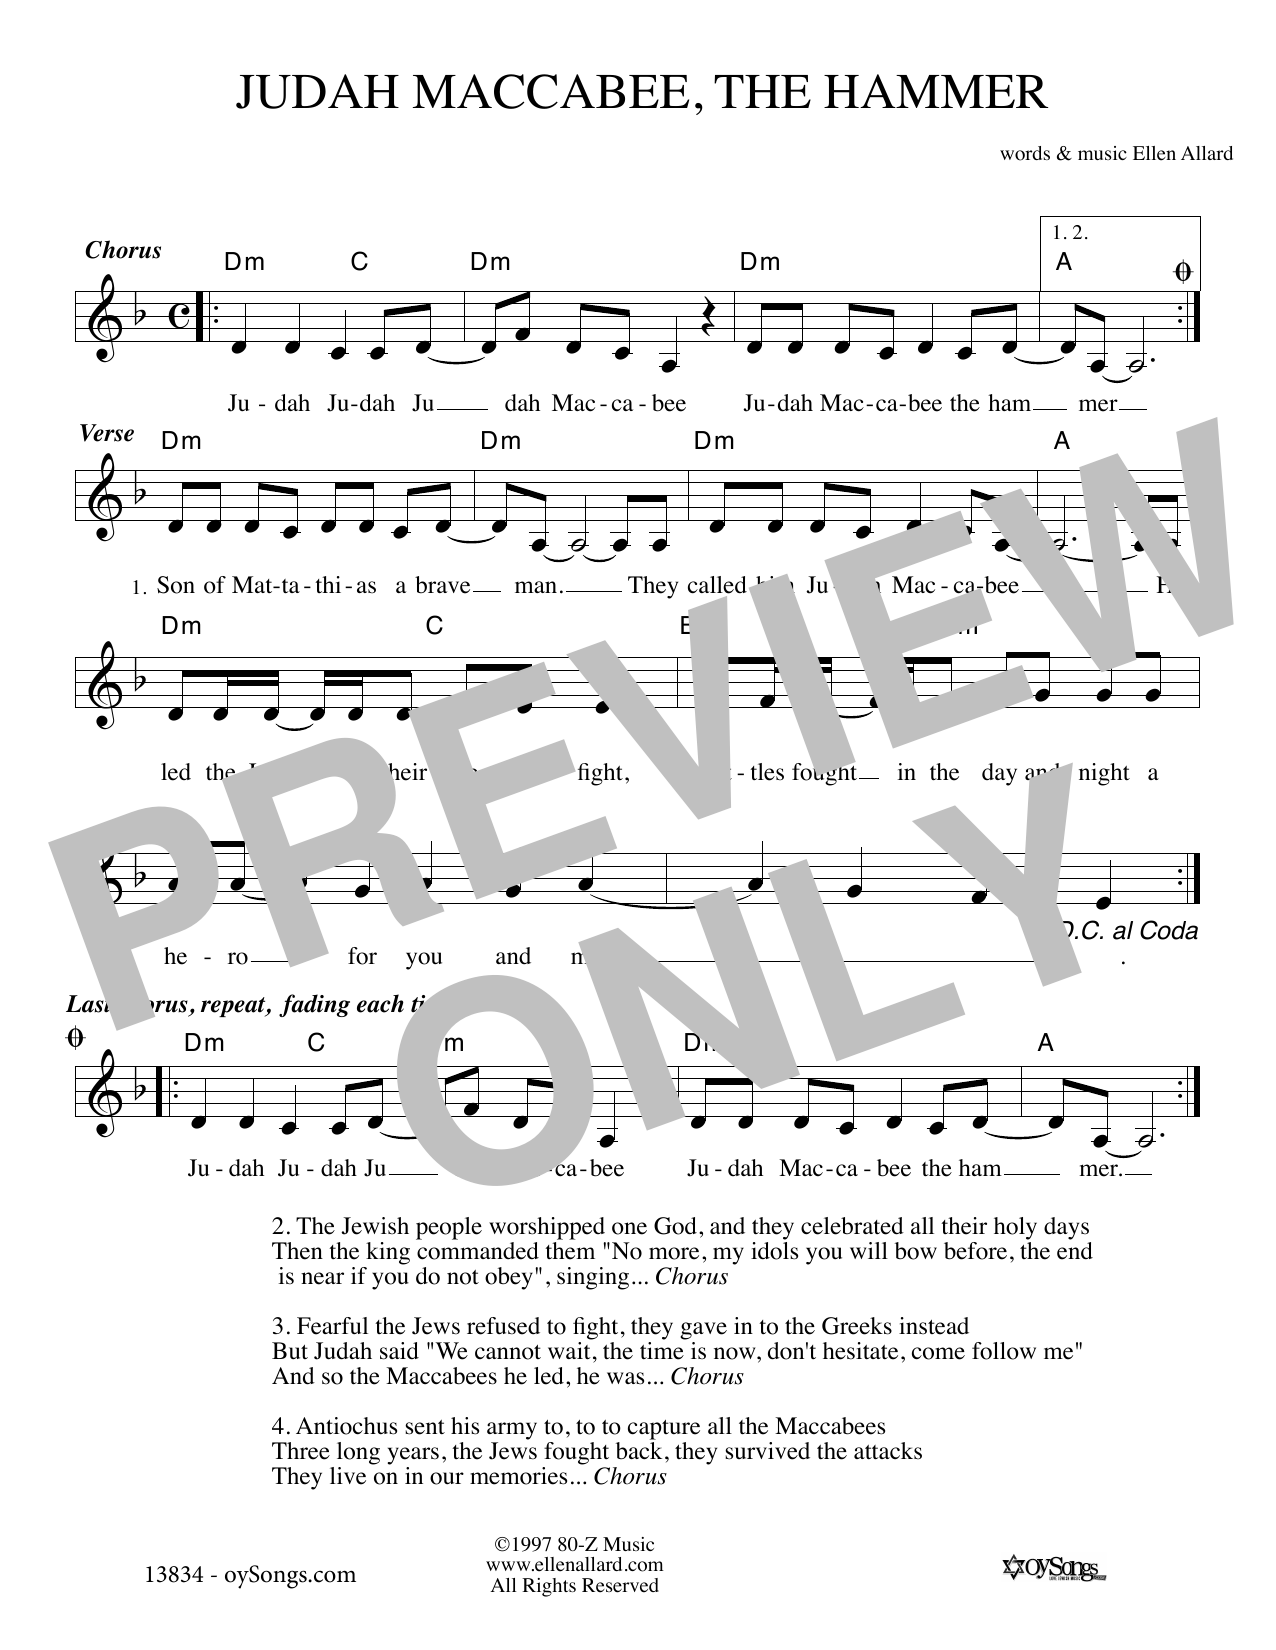 Download Ellen Allard Judah Macabee Sheet Music and learn how to play Melody Line, Lyrics & Chords PDF digital score in minutes